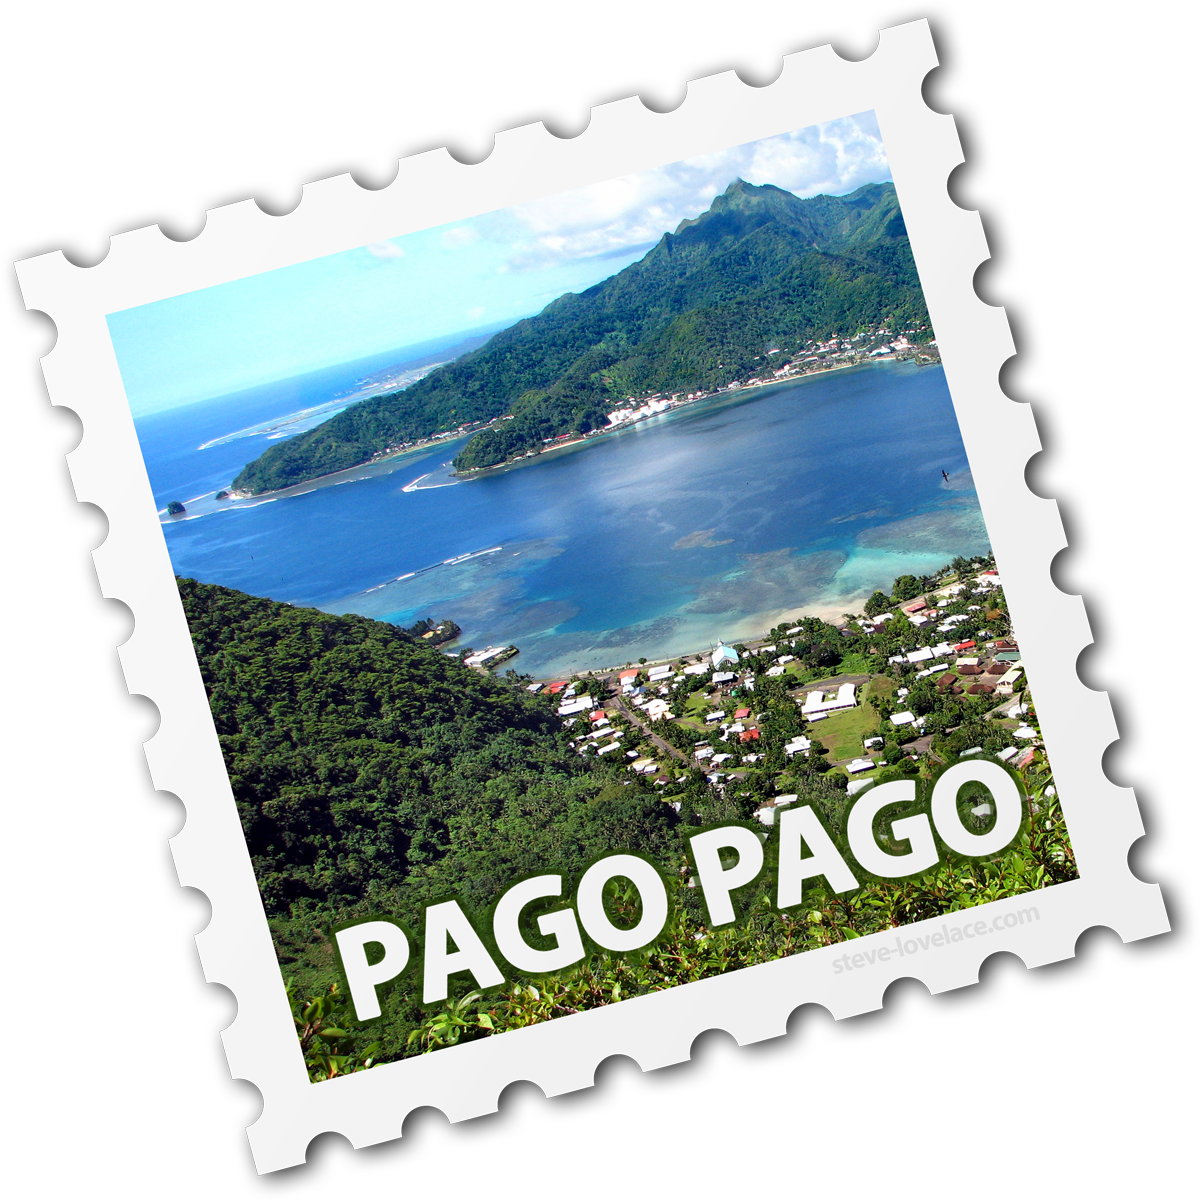 Postage Stamp PNG Image